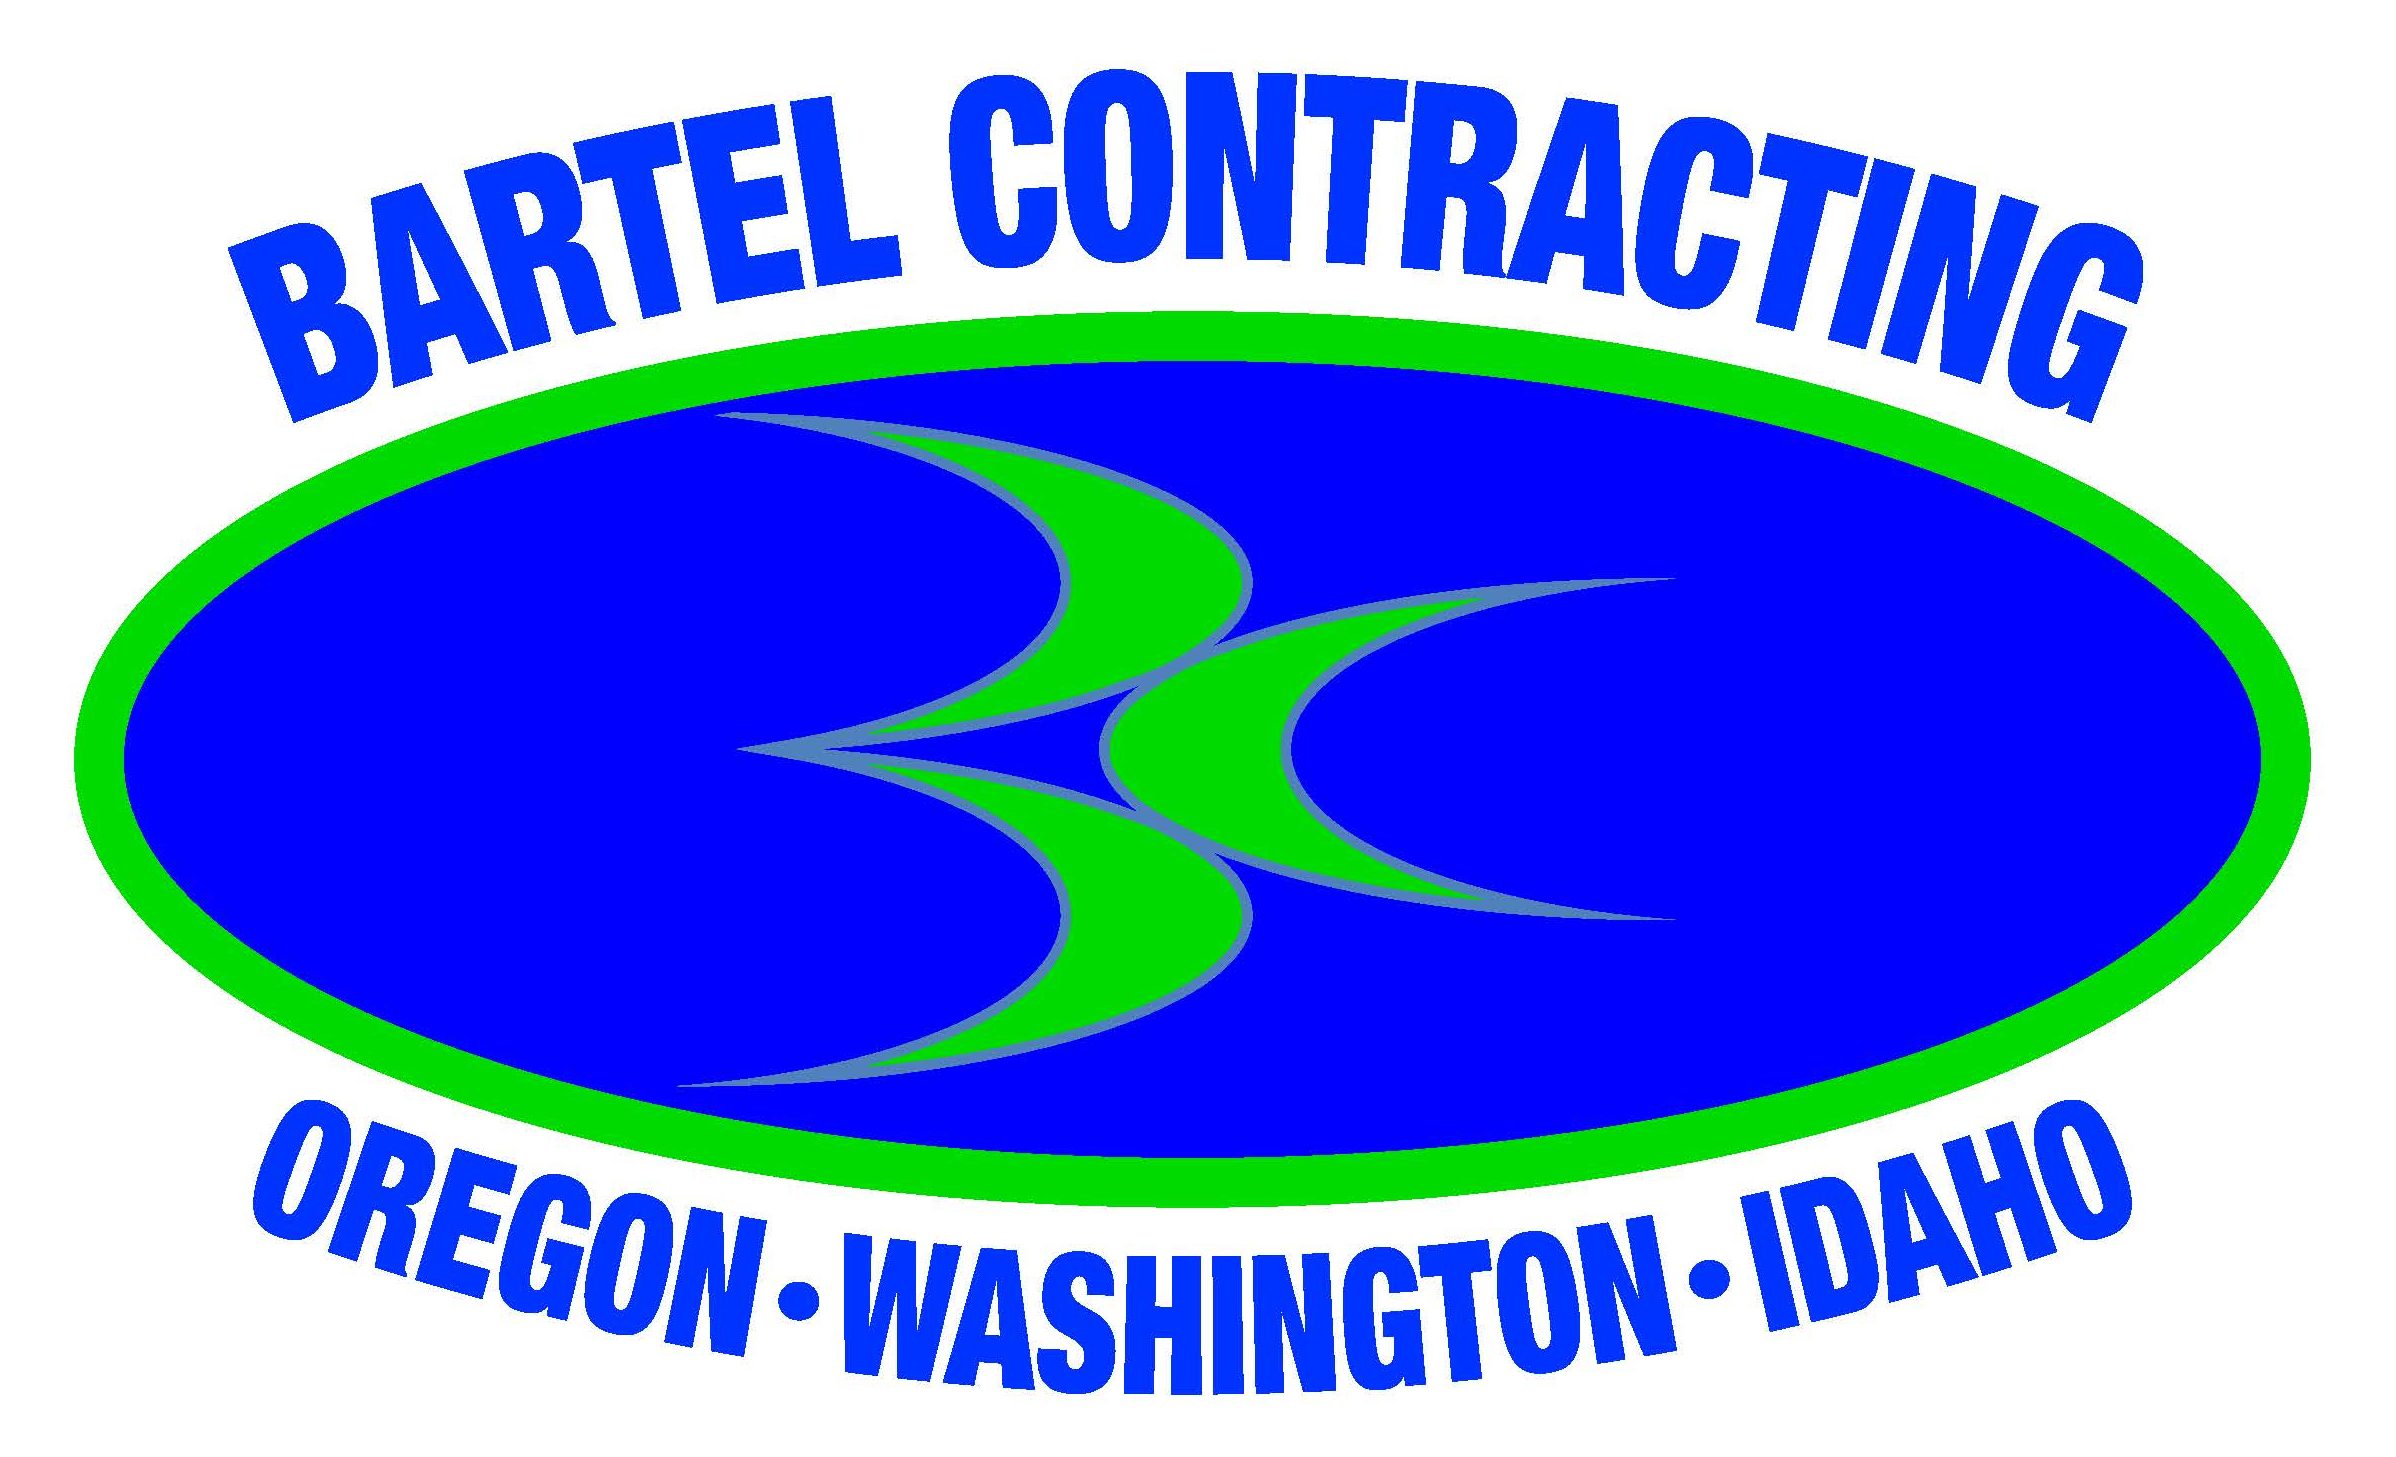 Bartel Contracting Inc. 